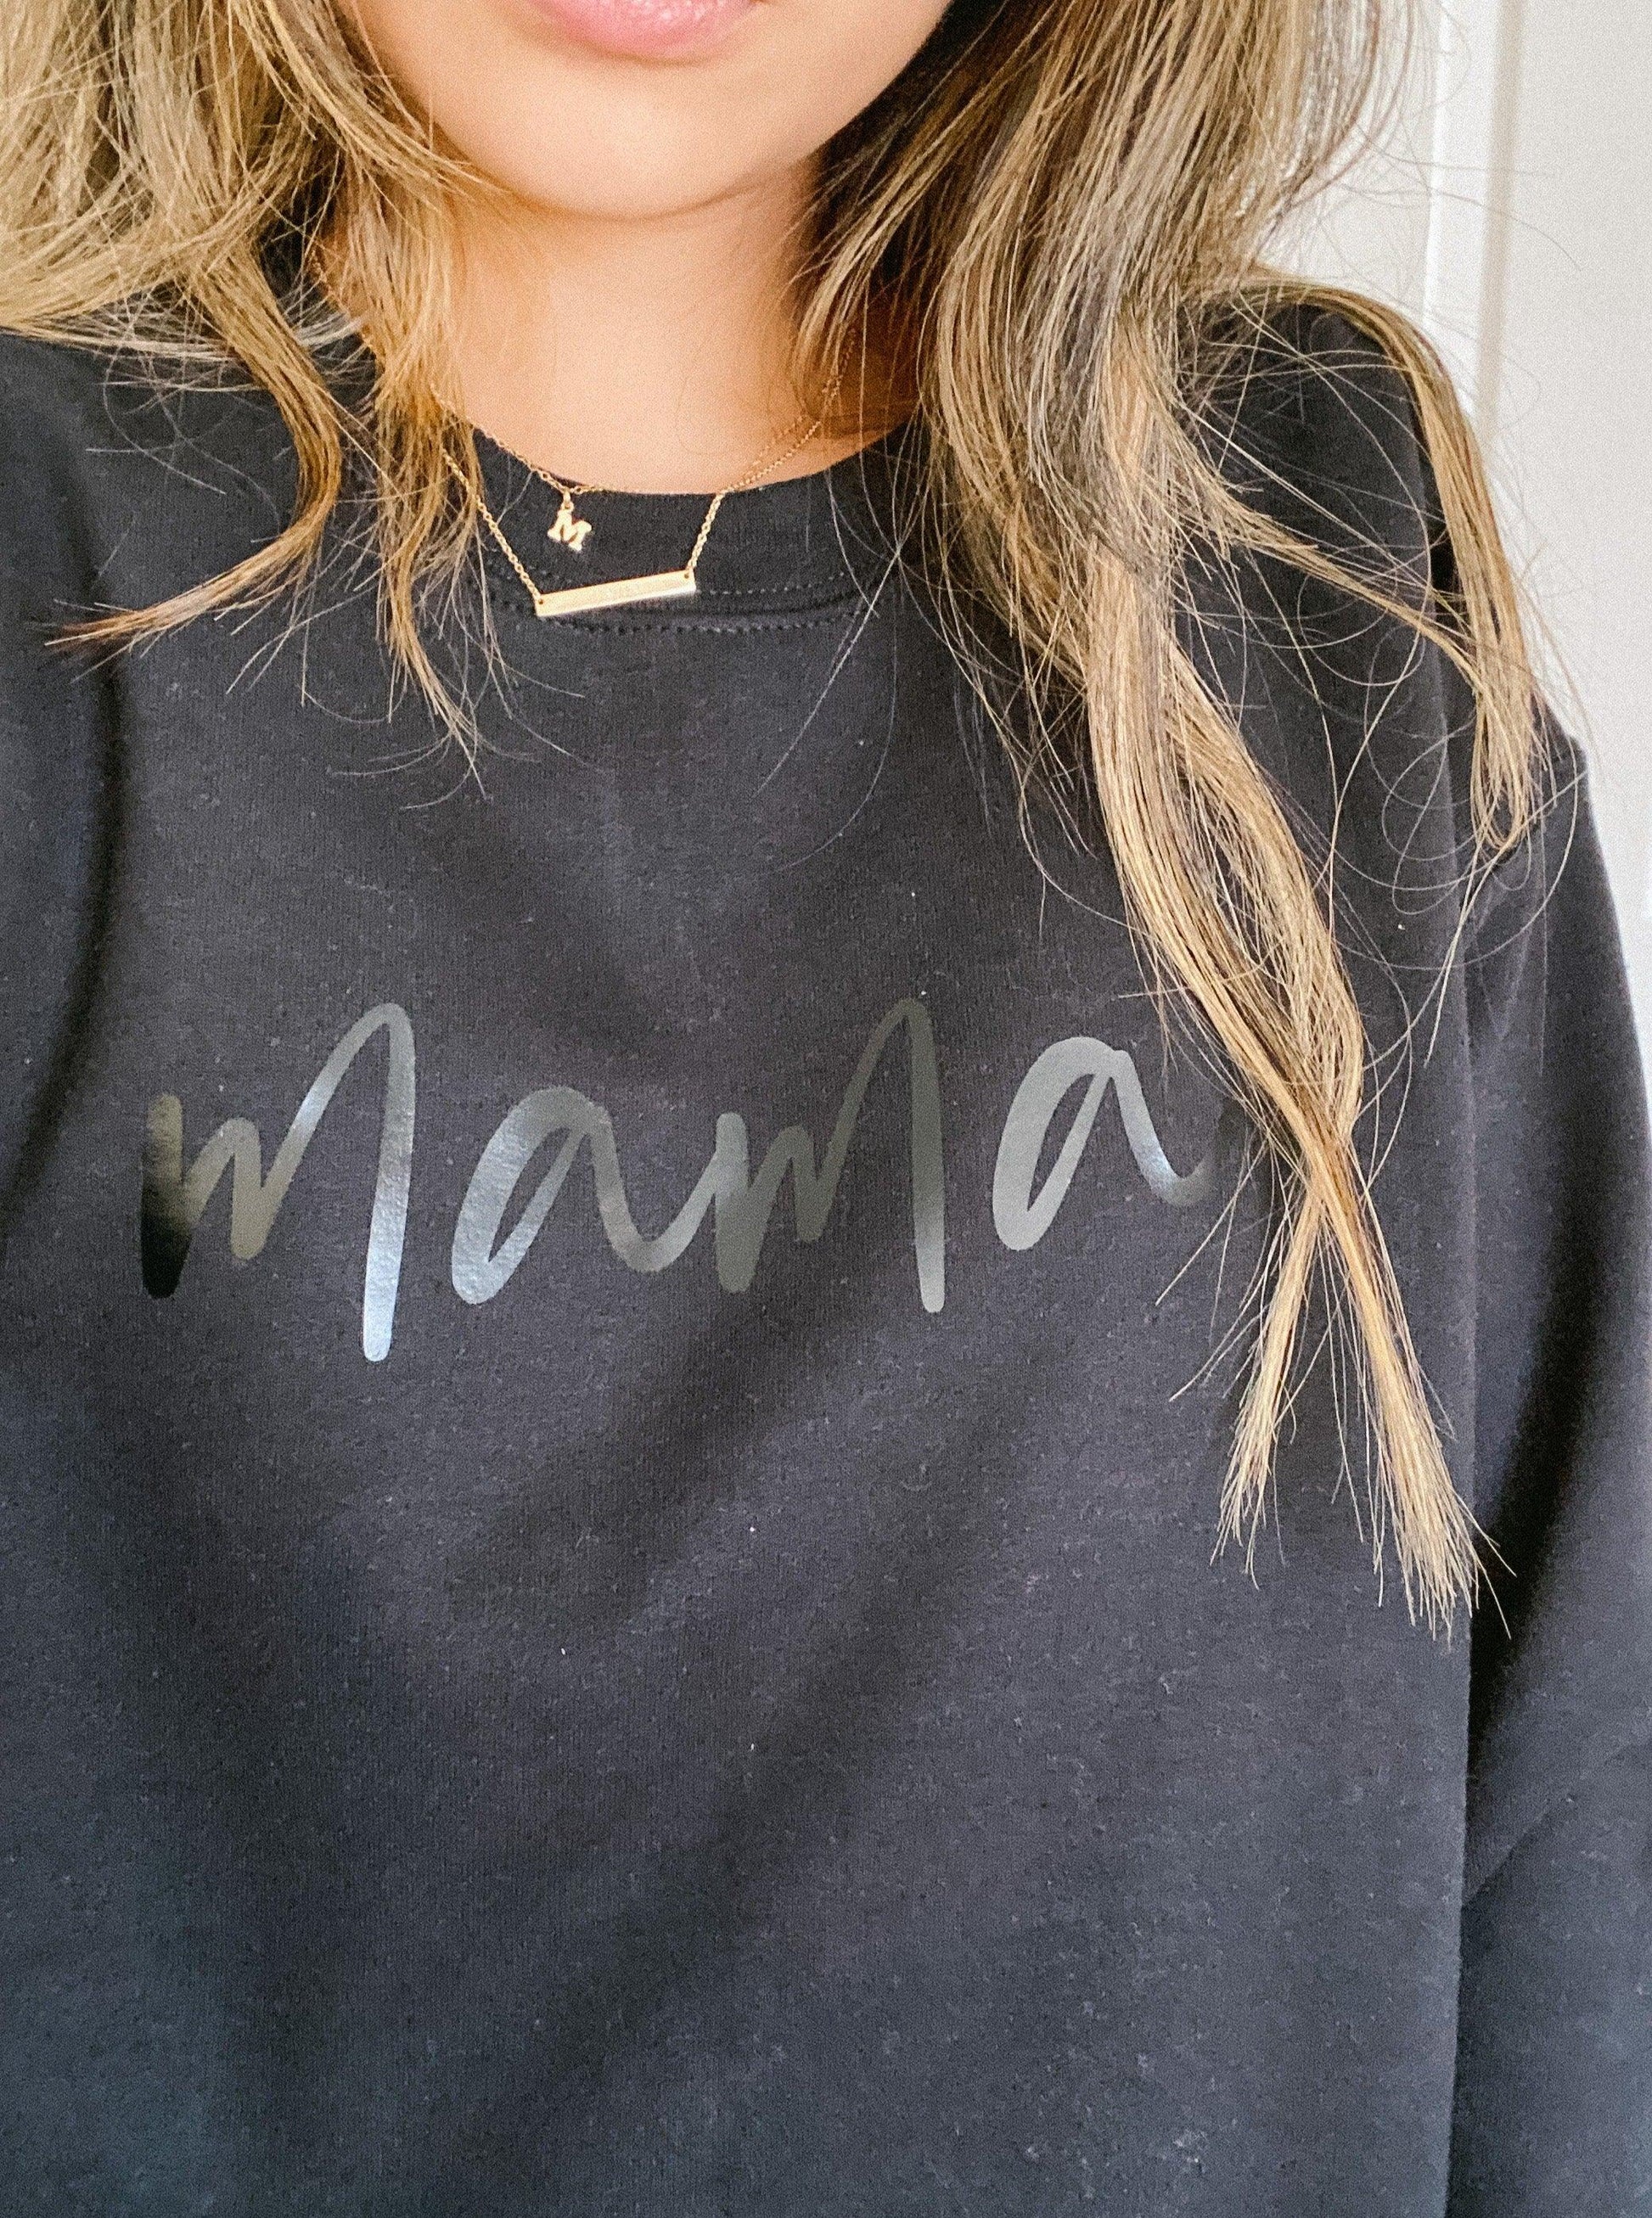 Mama minimalist crewneck - Made of Honour Co.